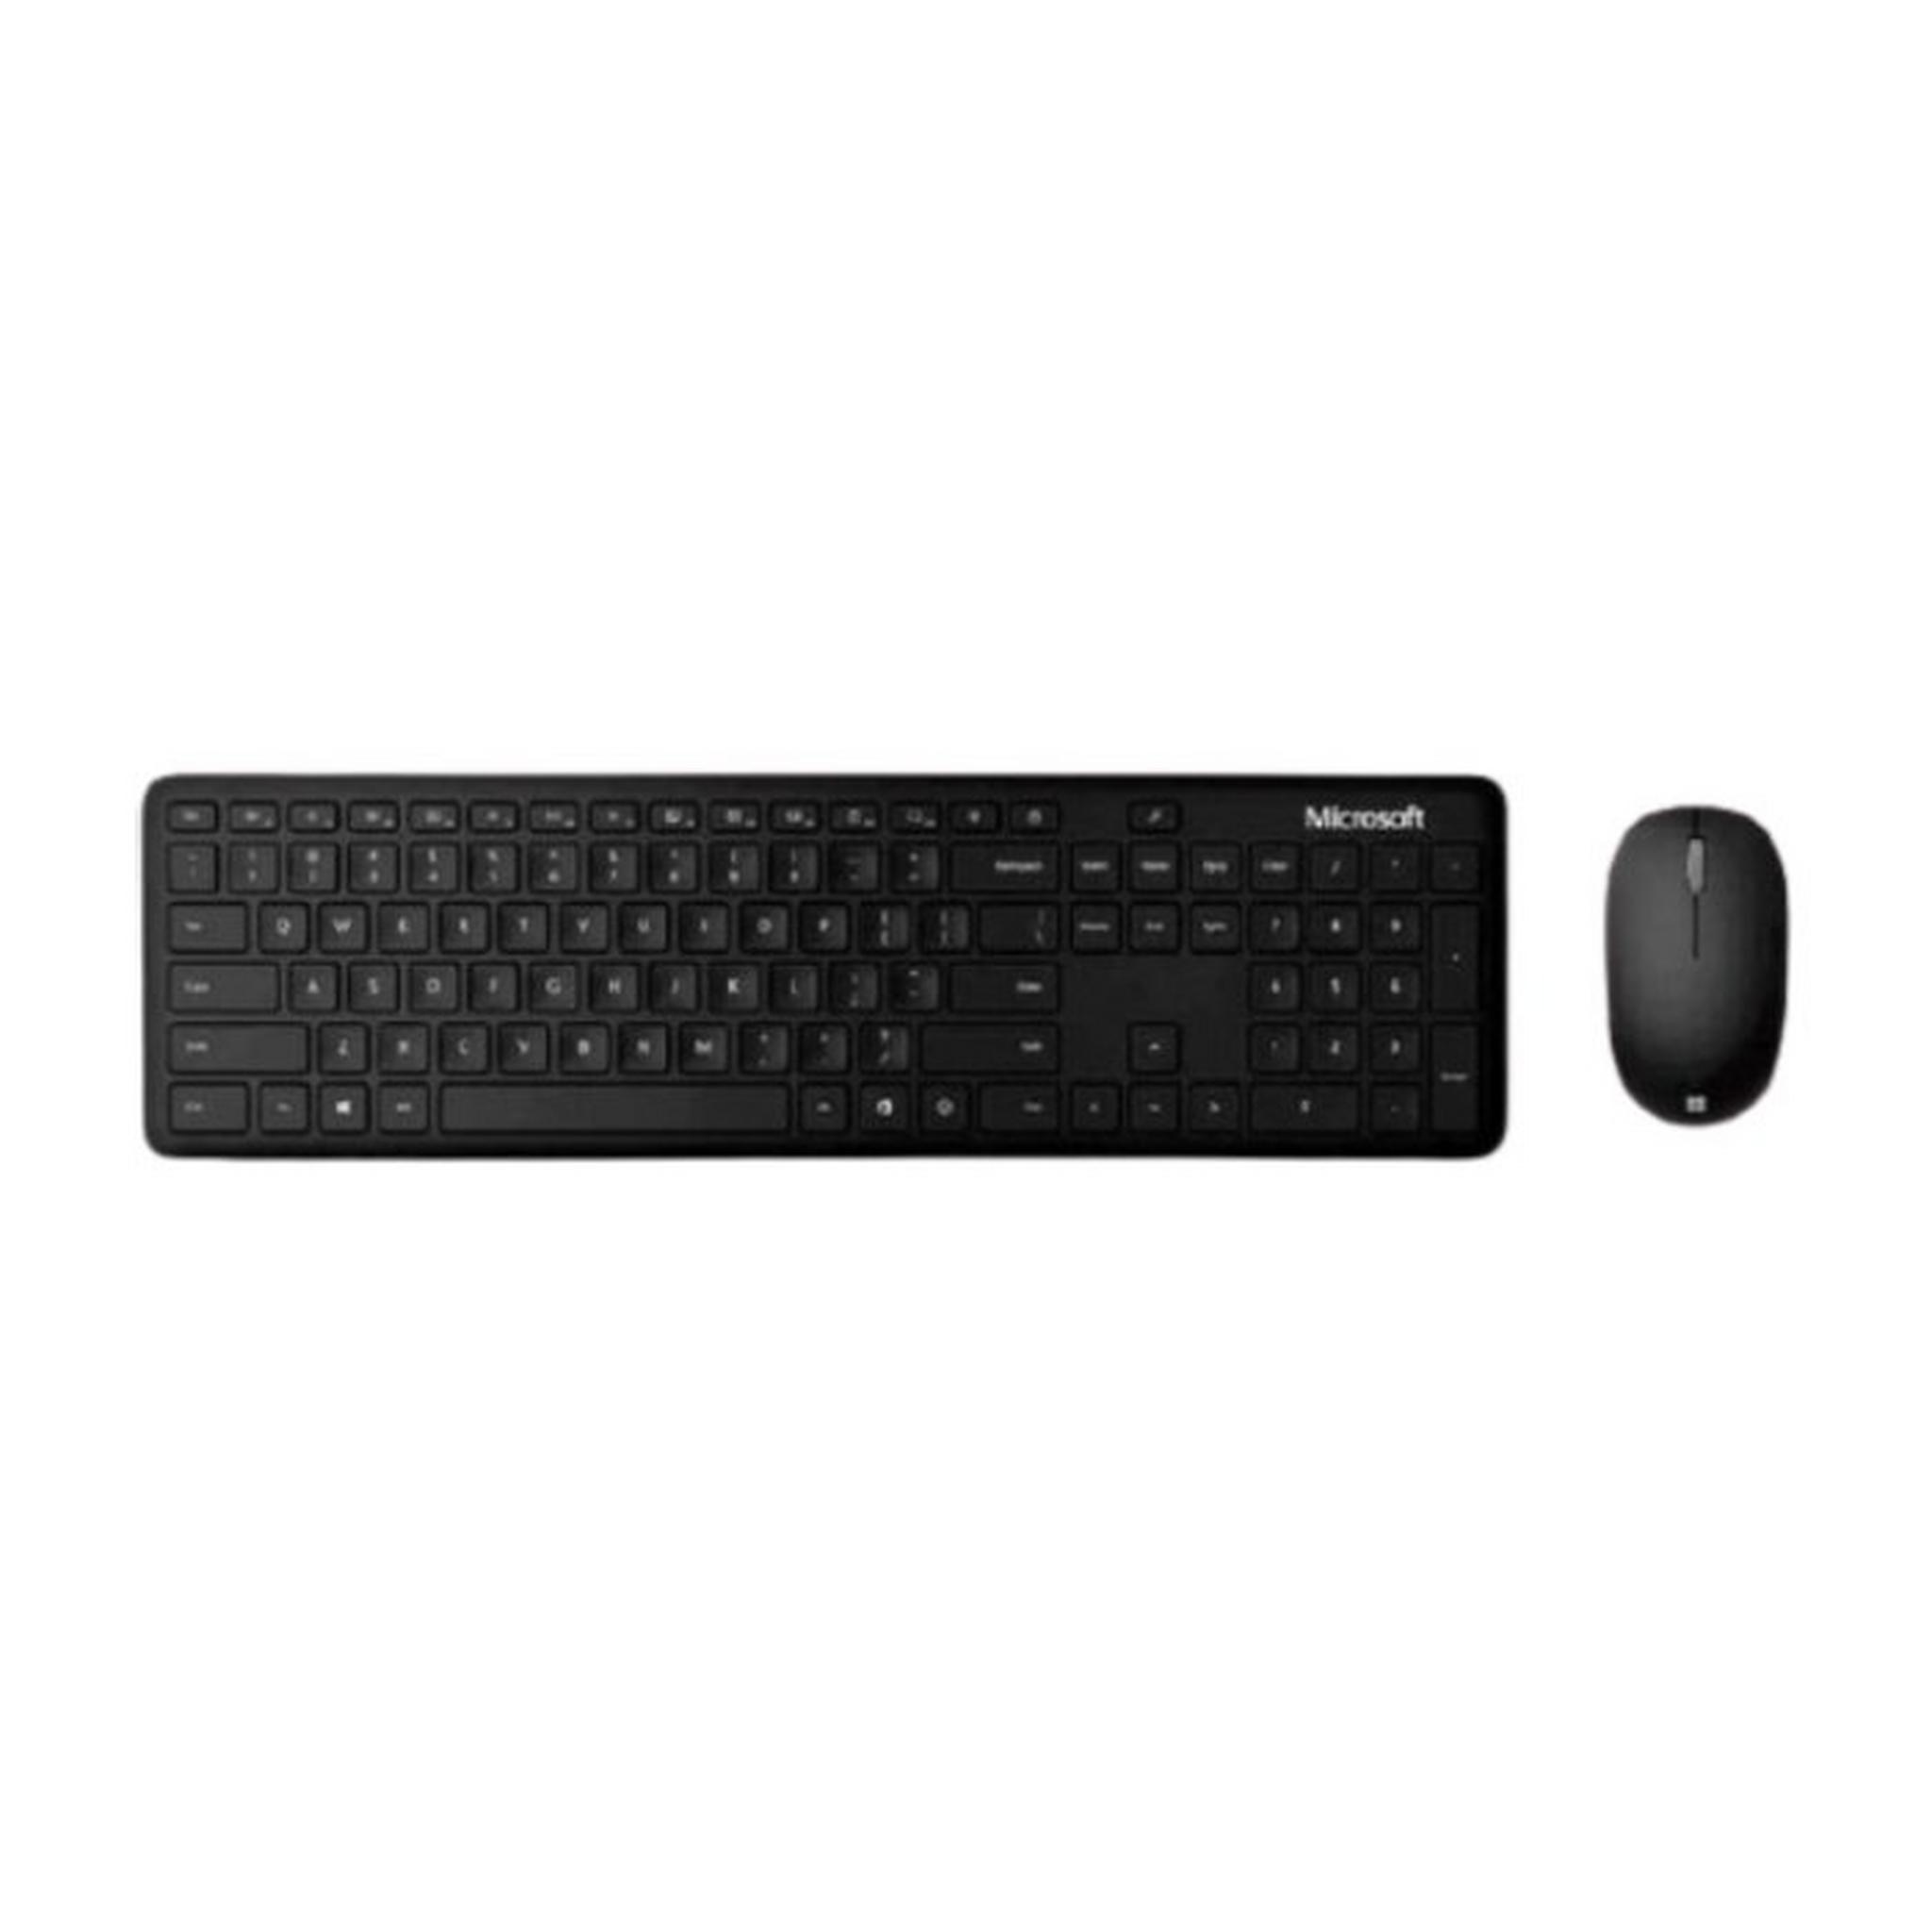 Microsoft Atom Bluetooth Desktop Keyboard and Mouse - Black